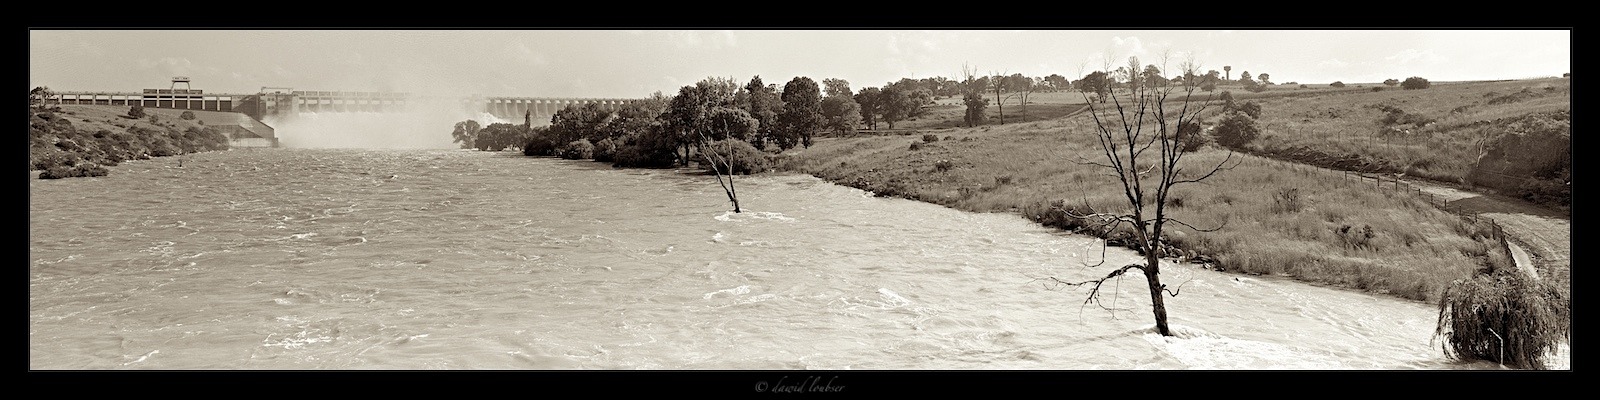 Vaal_River_Sluice_Flooding_by_philosomatographer.jpg